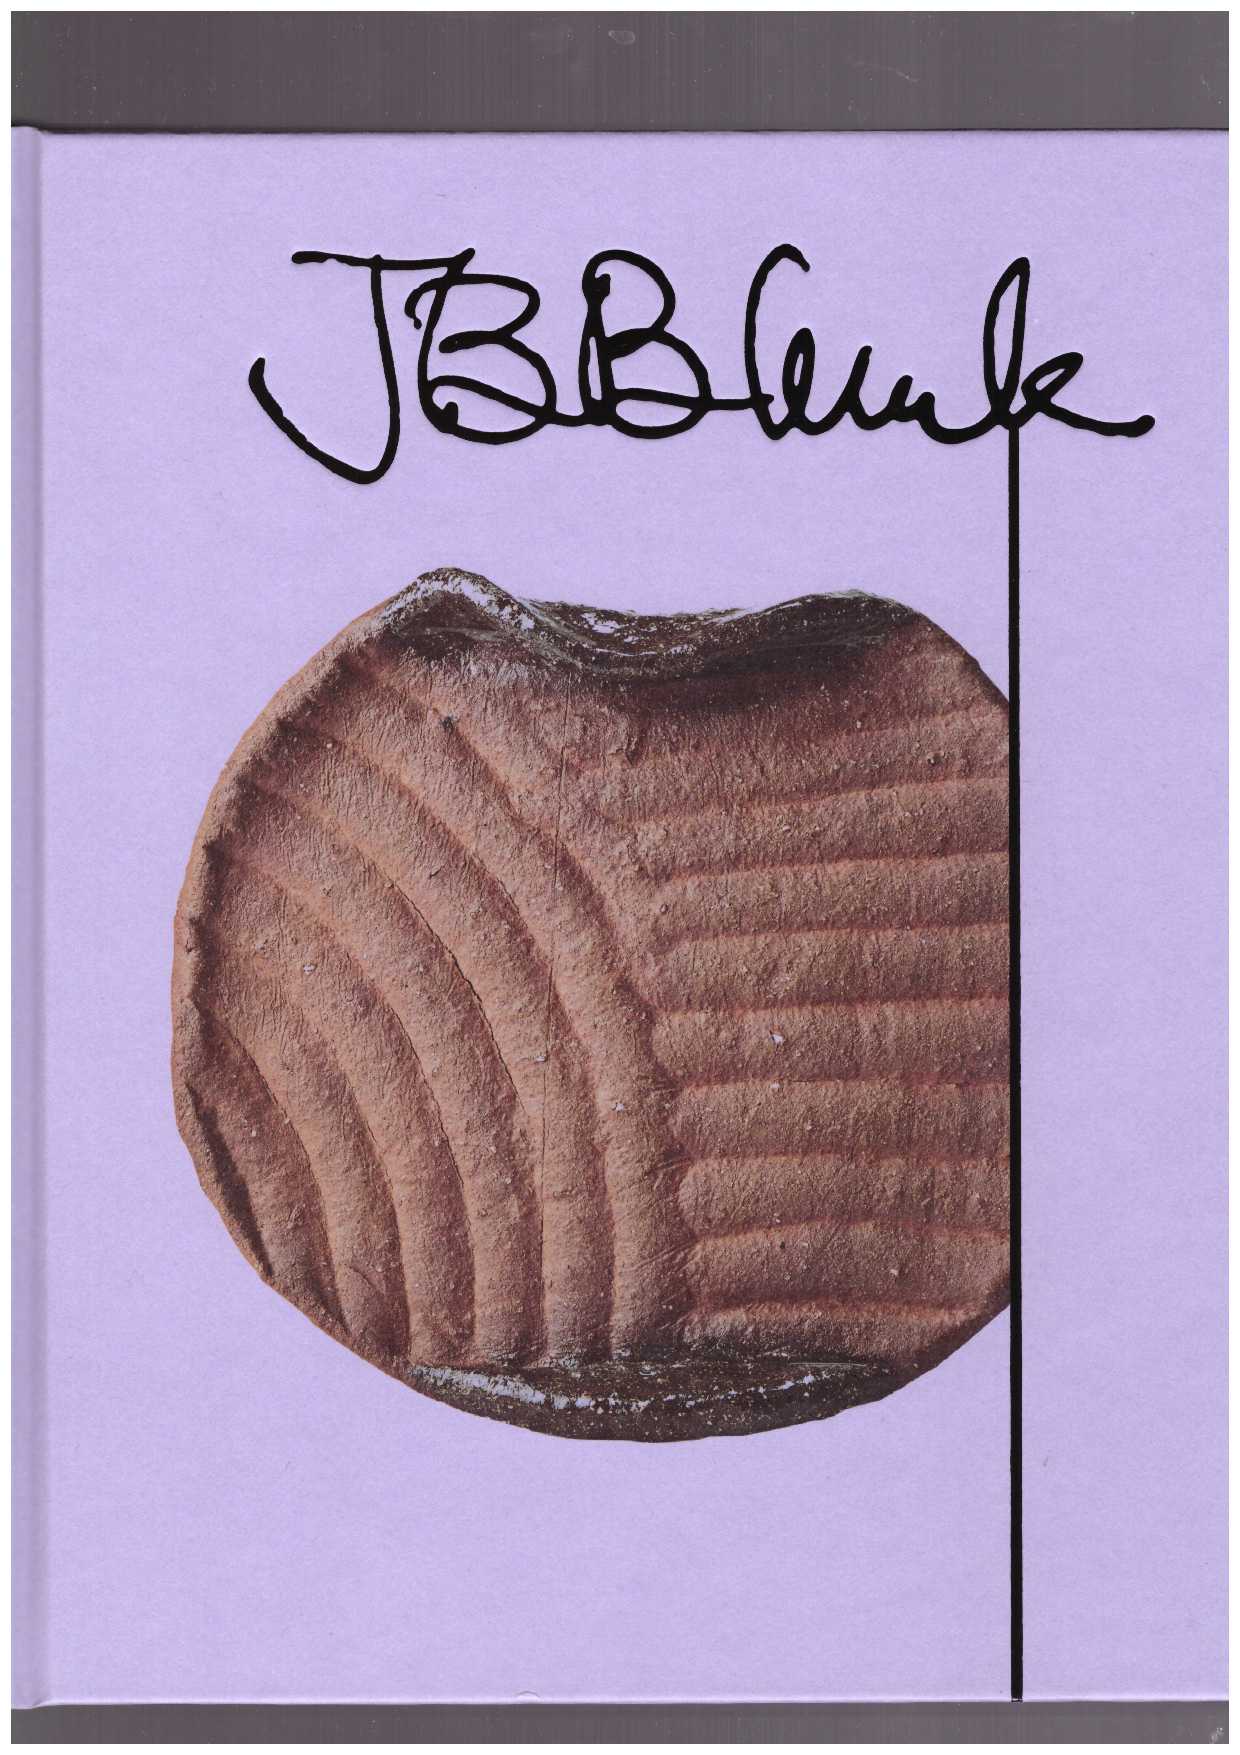 NIELSON, Mariah; ÅBÄKE - JB BLUNK (second edition)